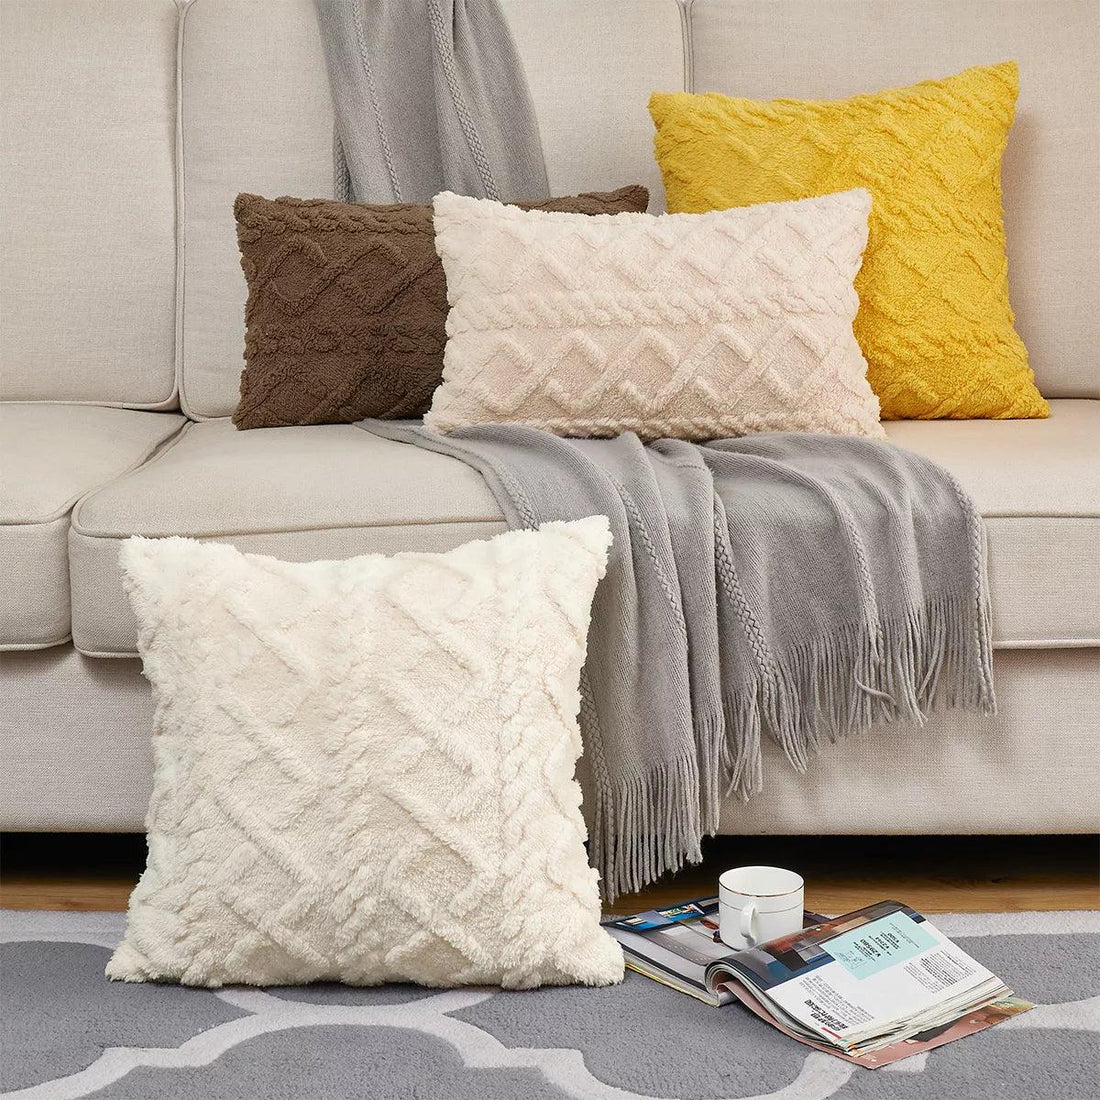 Soft Throw Pillow Cover: Decorative Home Pillows in White Pink Cream Grey Purple Khaki Coffee Retro Fluffy Design